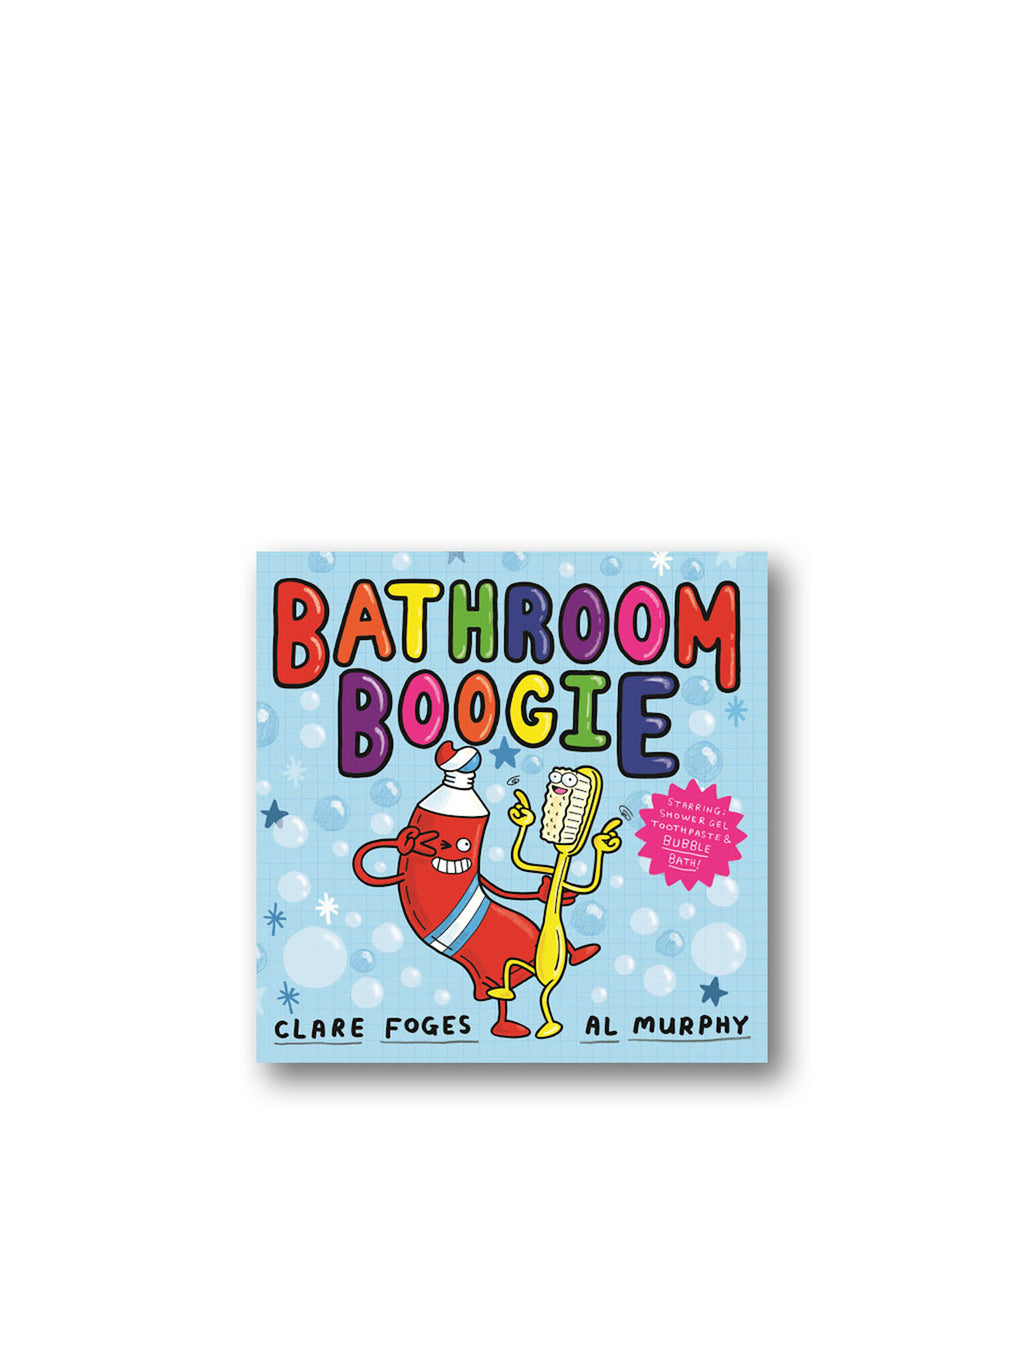 Bathroom Boogie